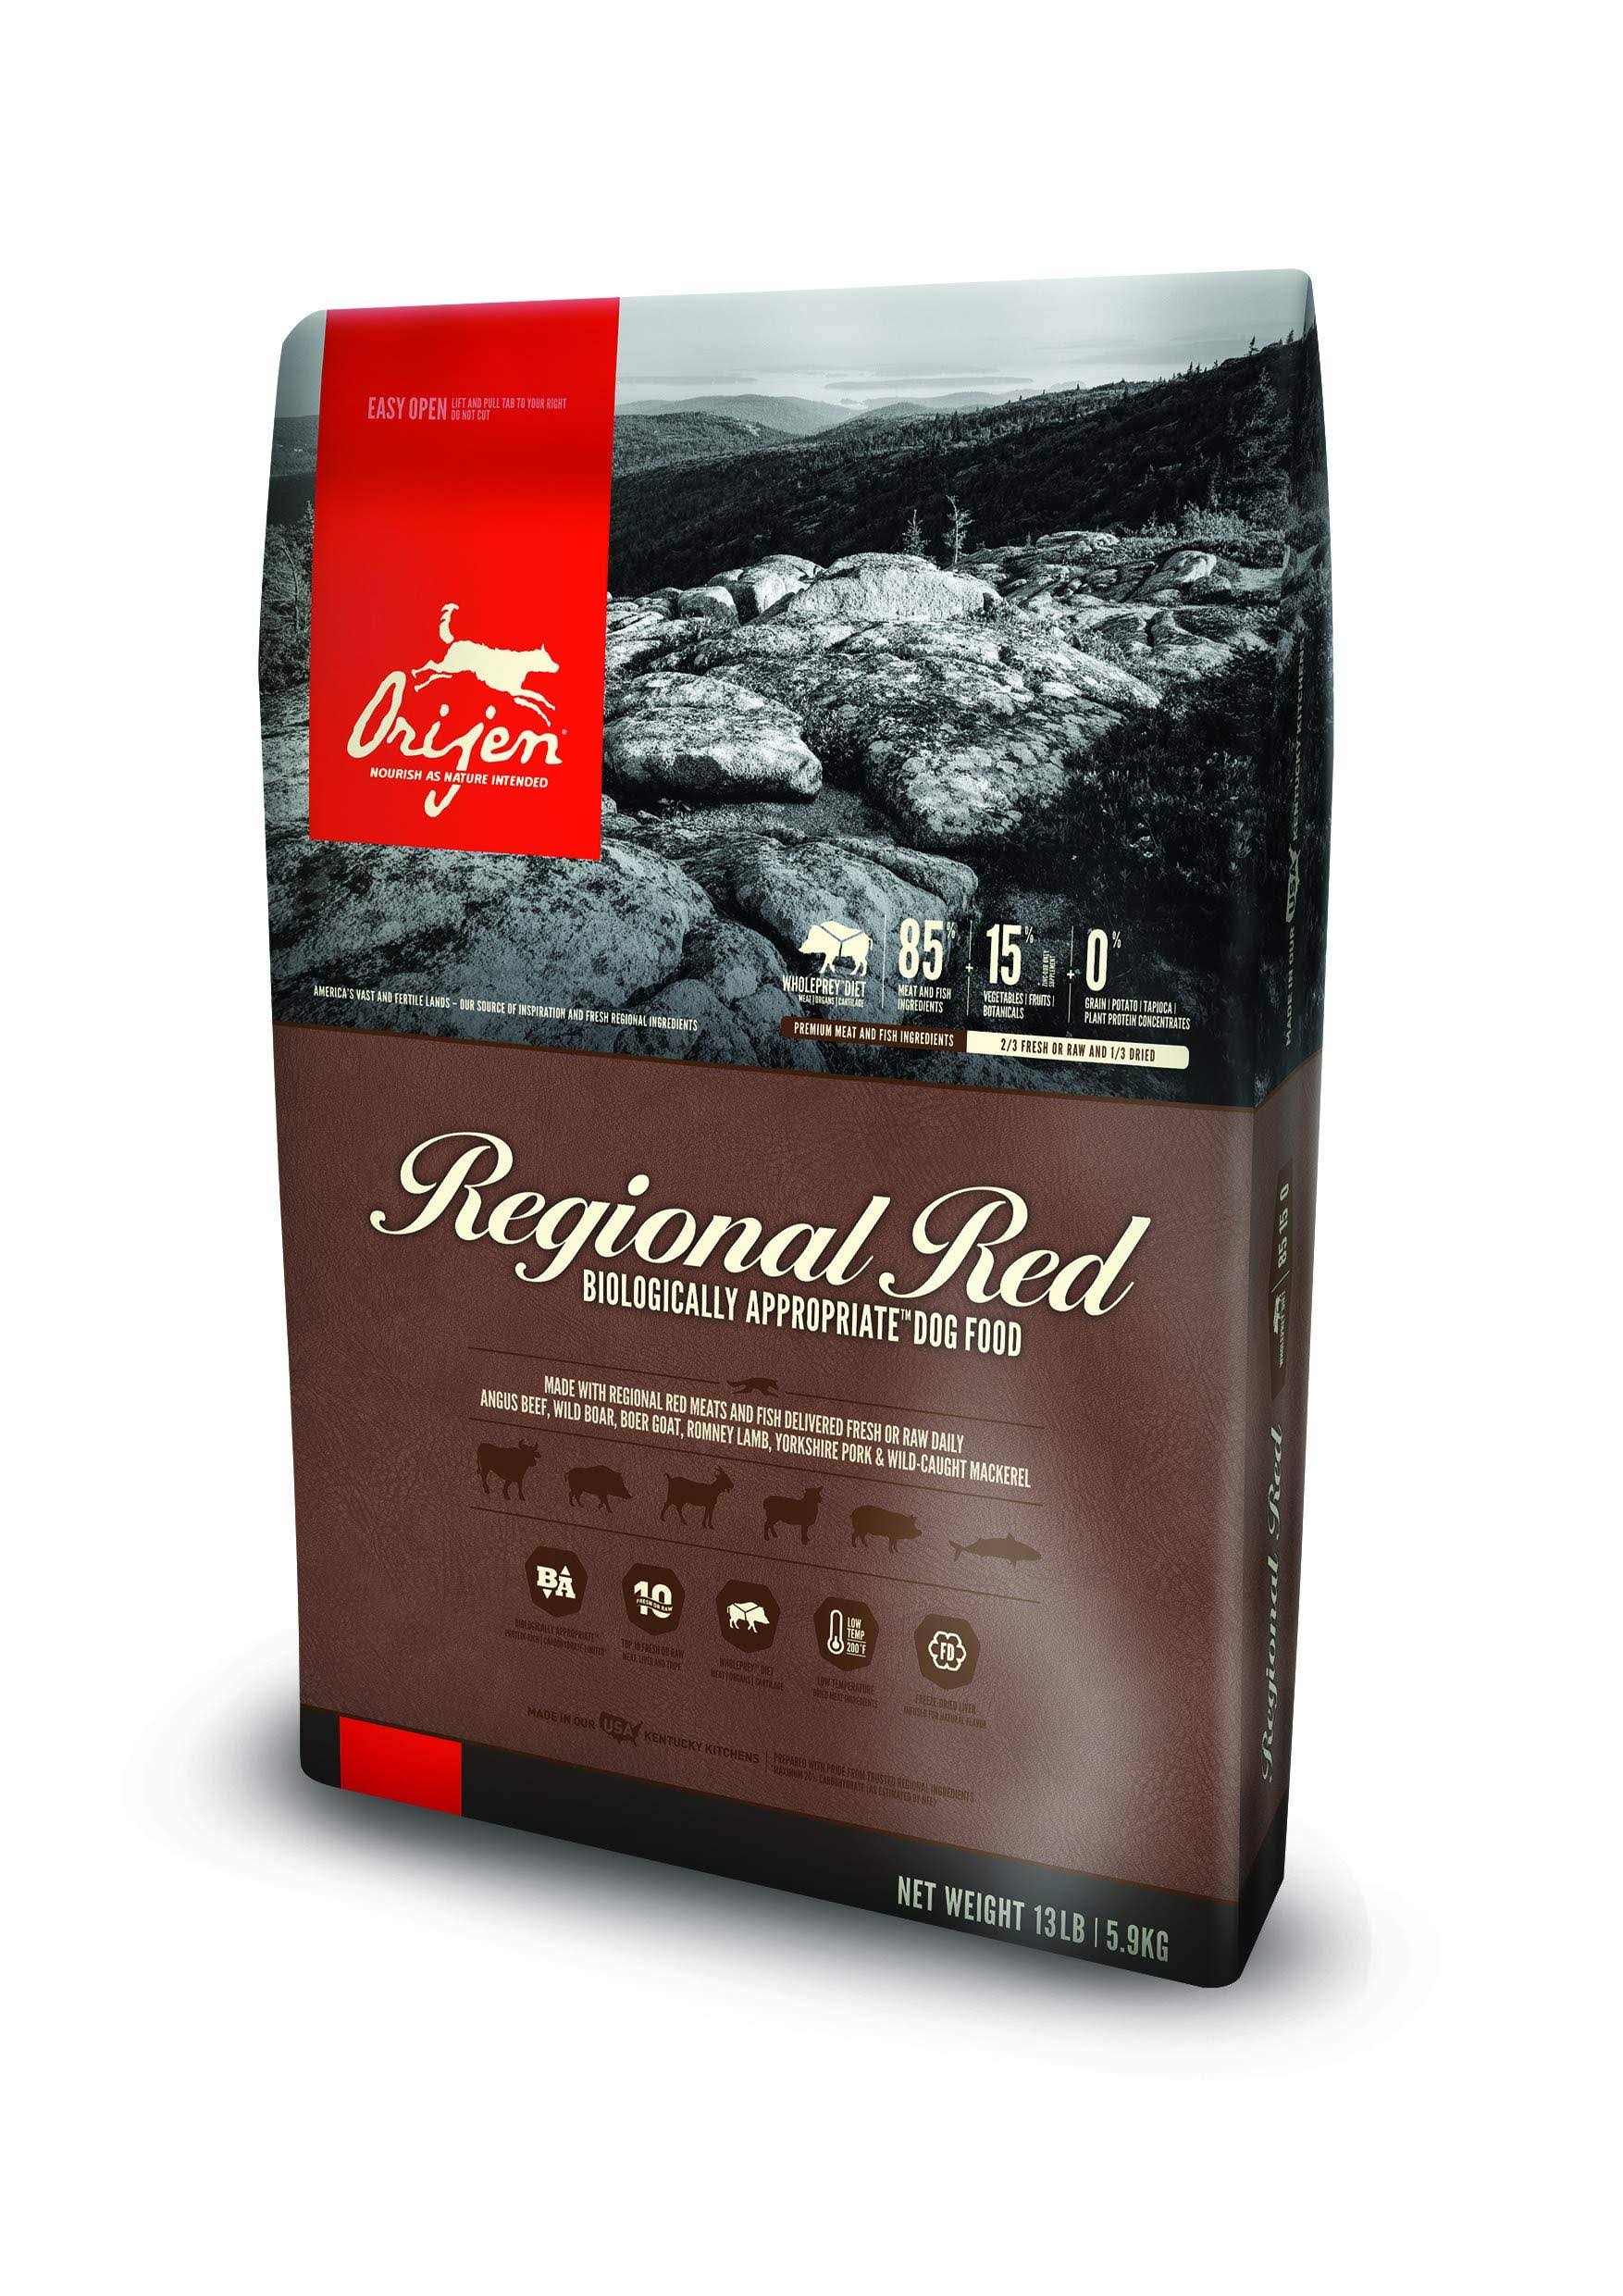 Orijen Regional Red Dry Dog Food, 13 lb